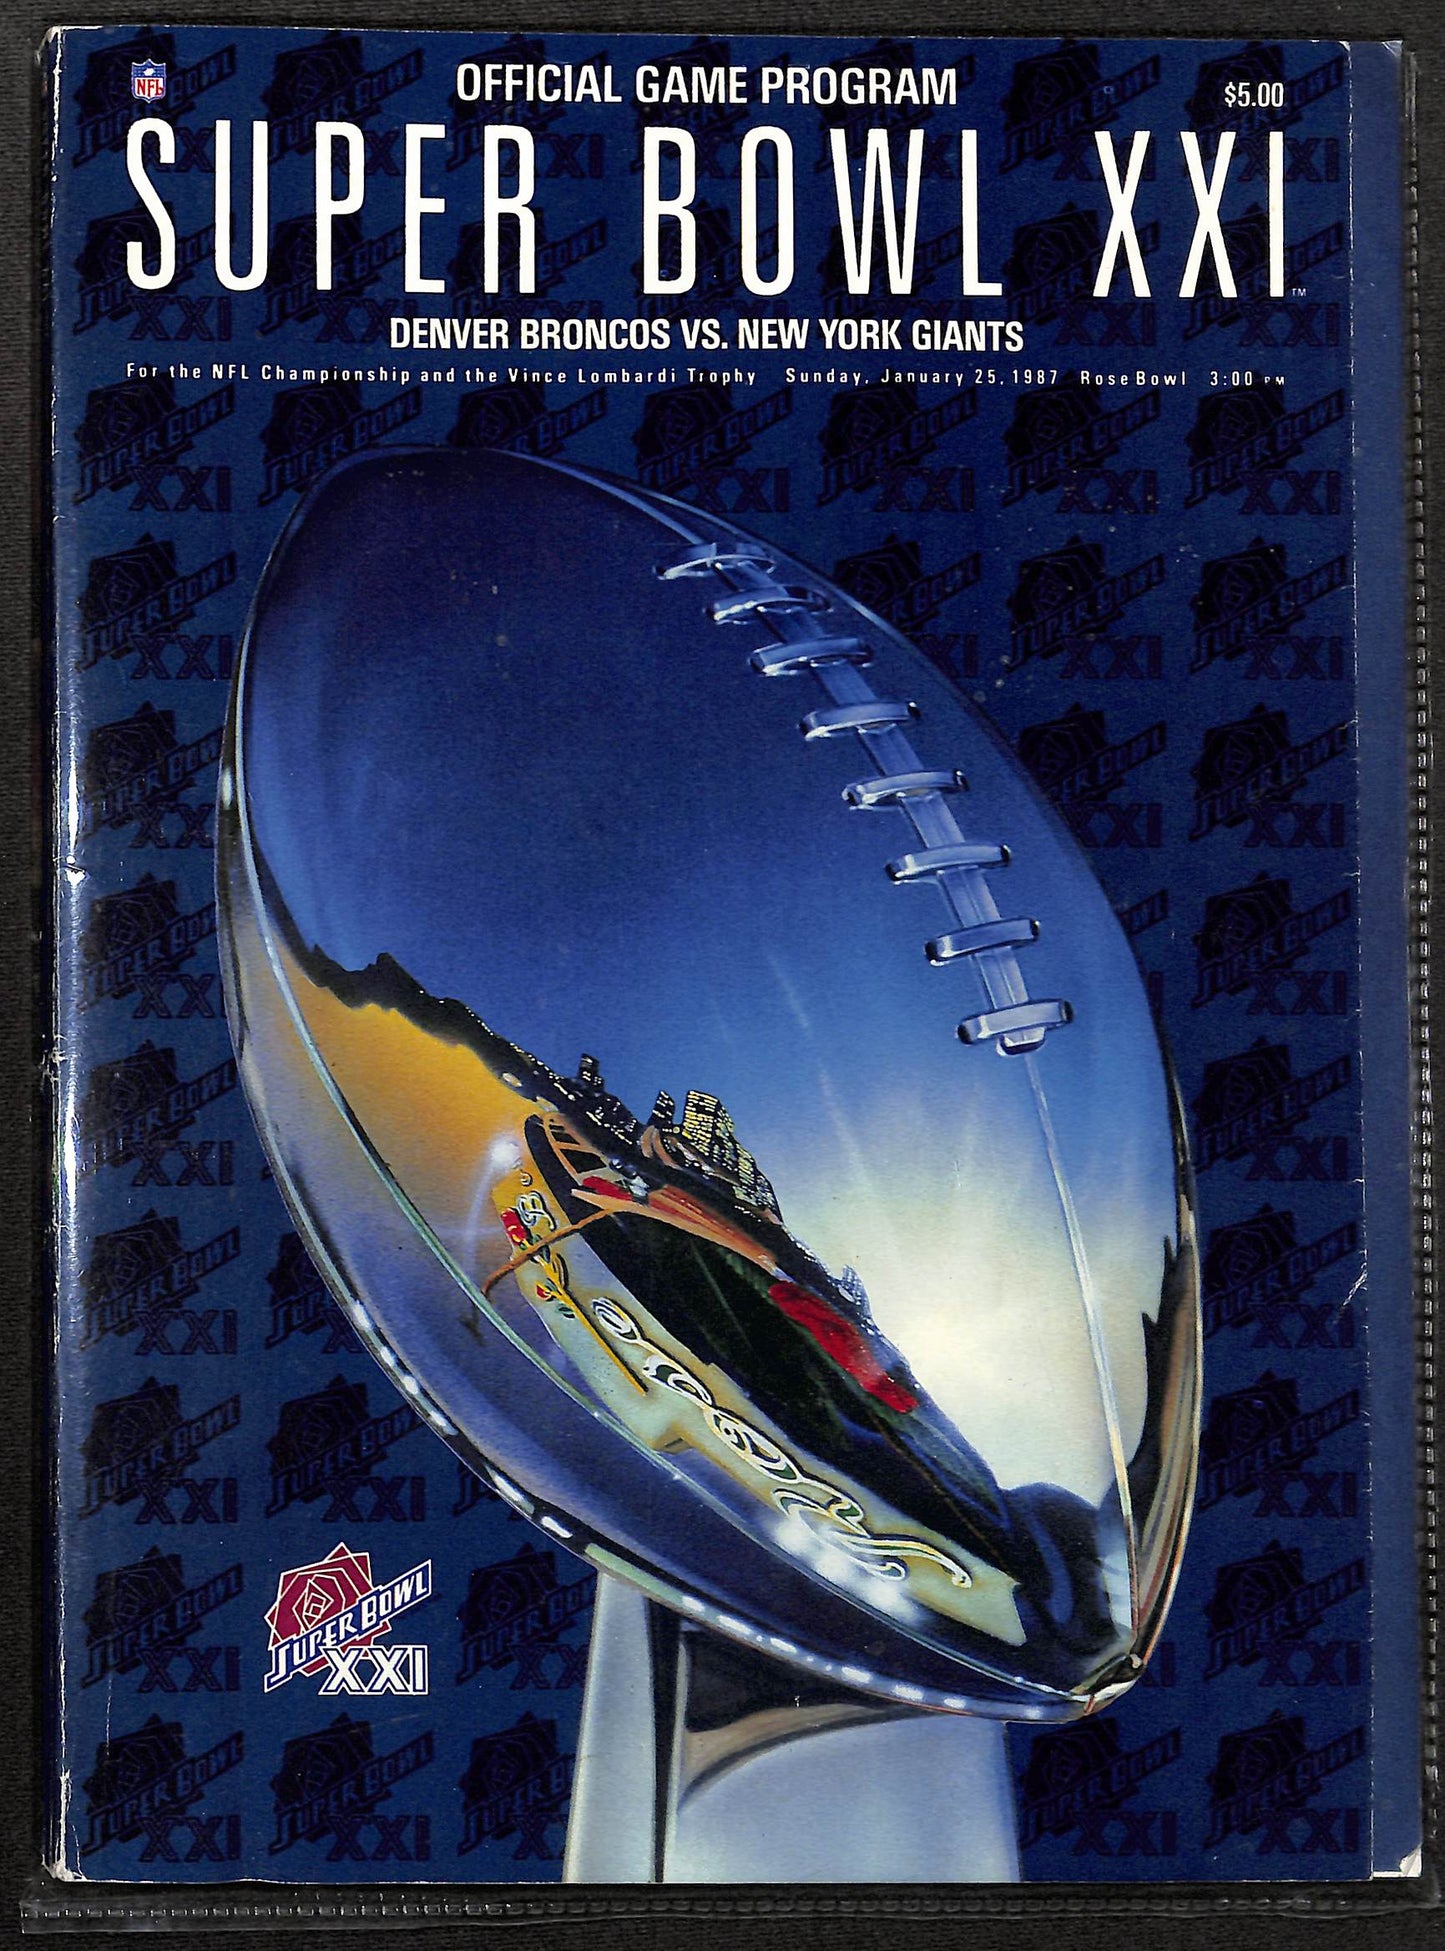 FIINR Other Sports Memorabilia 1987 Super Bowl 21 Real Game Program - Vintage Super Bowl XXI Rose Bowl Stadium Denver Broncos Vs New York Giants -